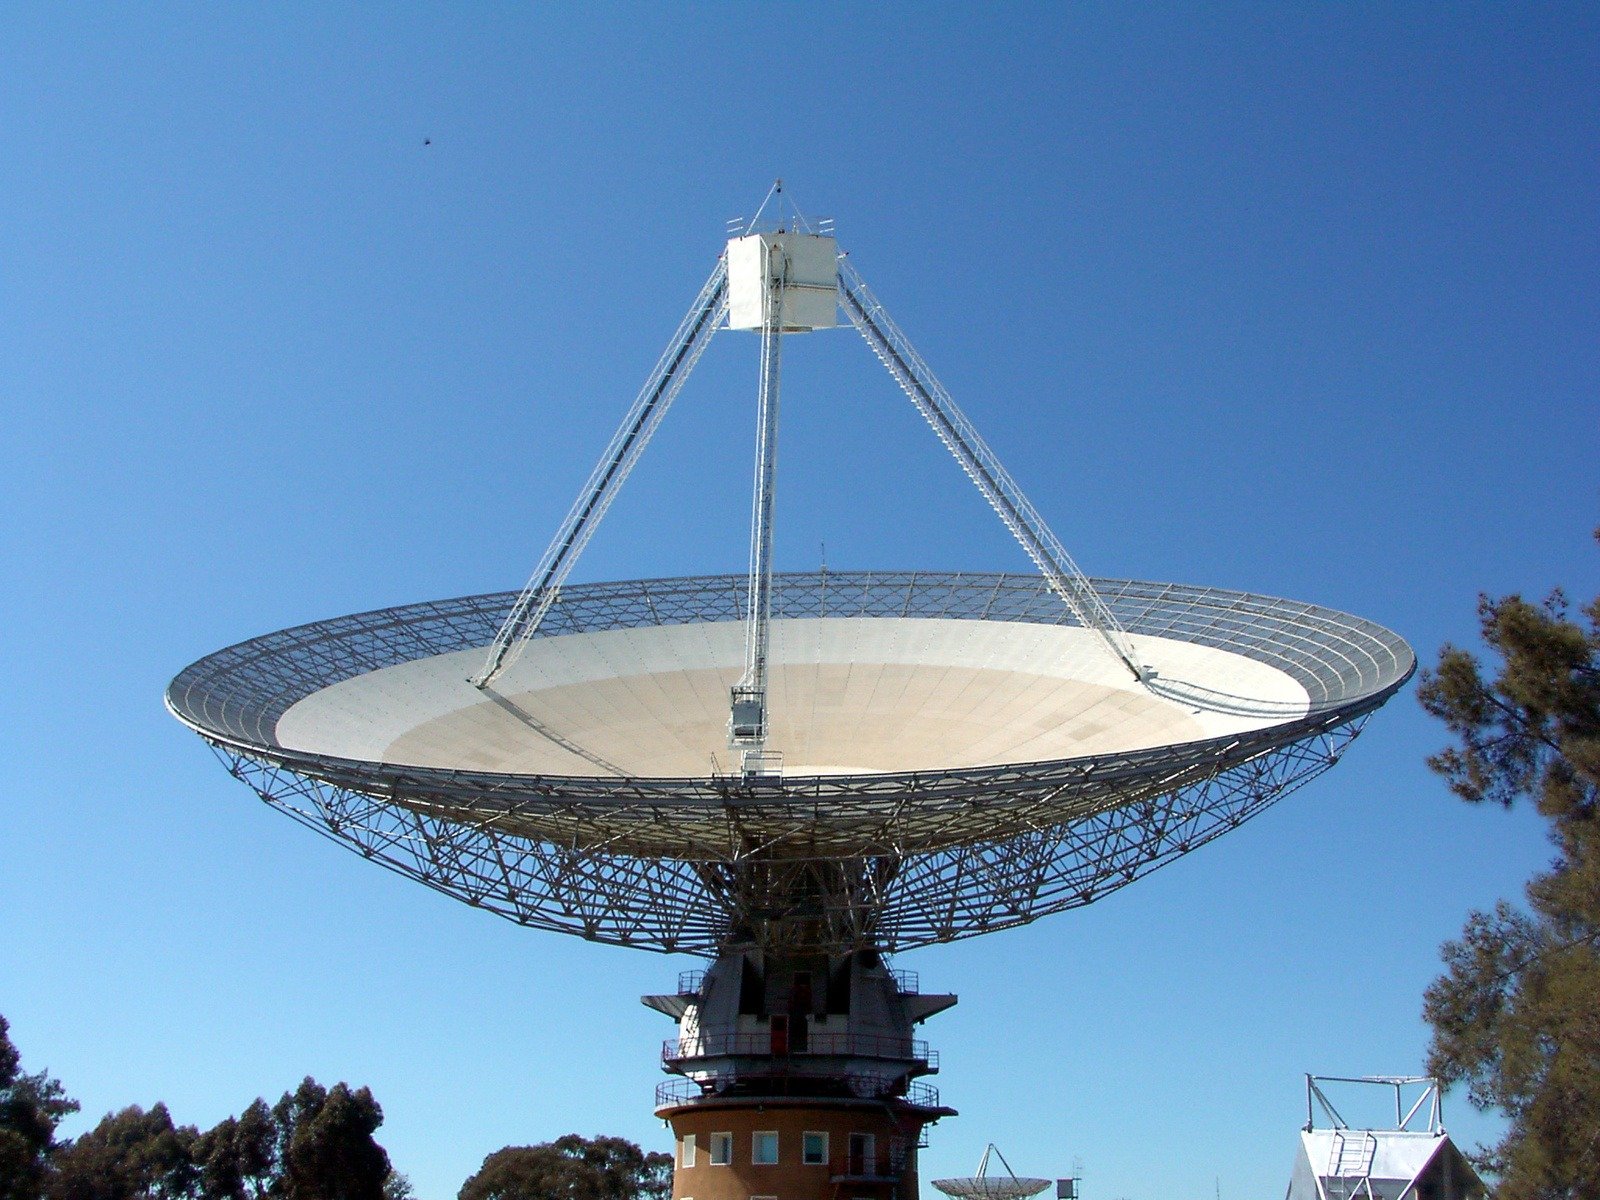 One of the big single dish radio telescopes